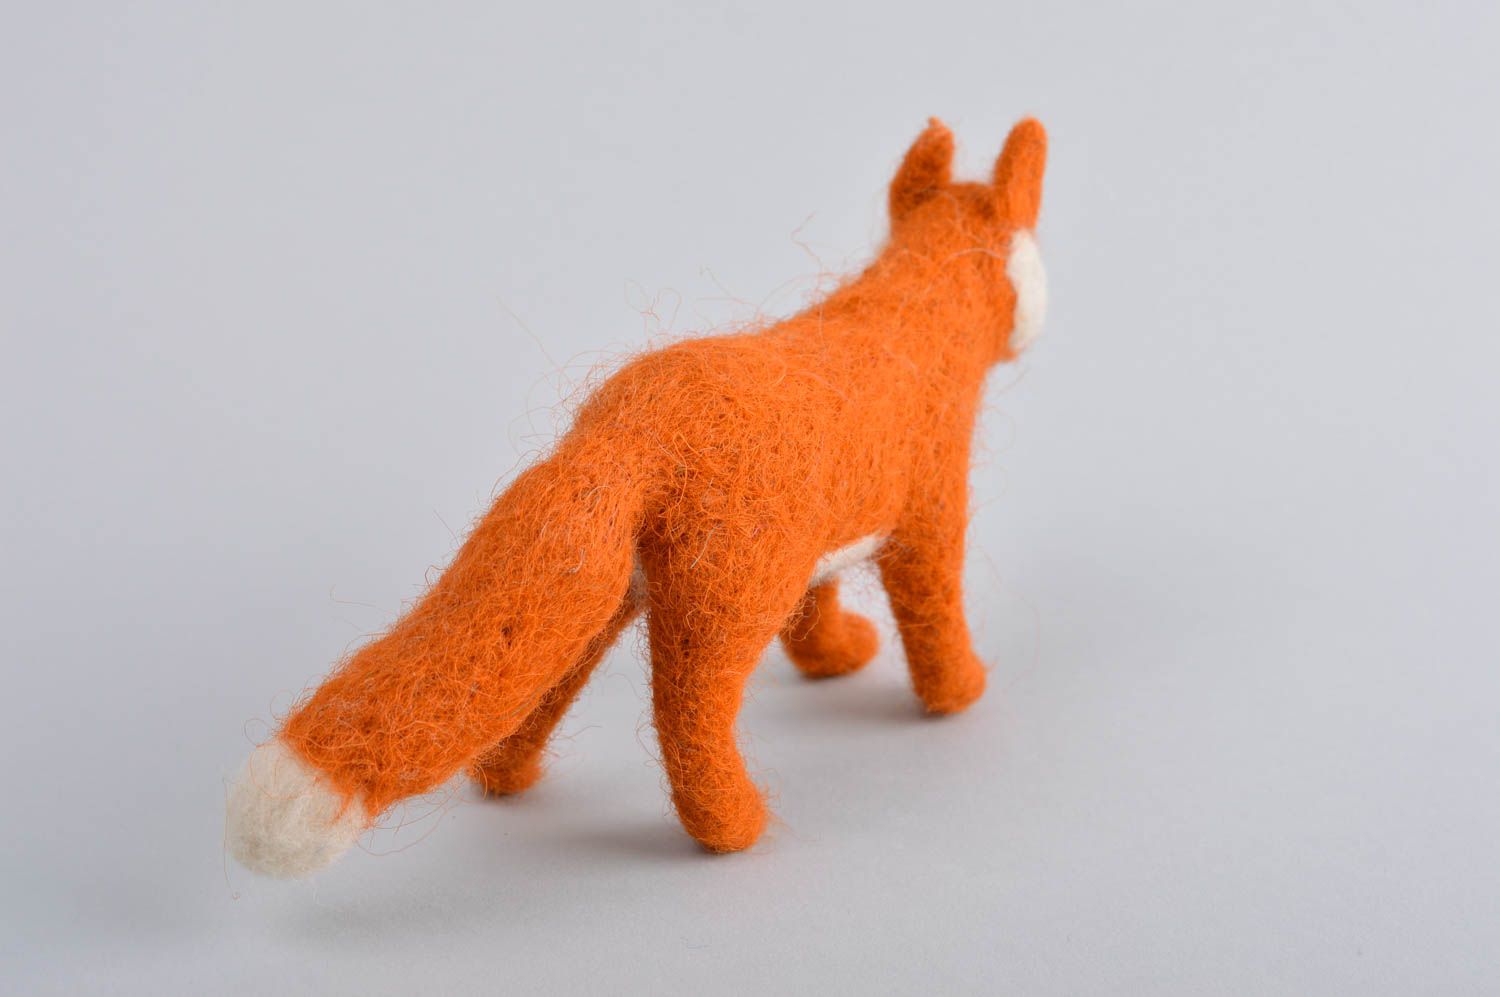 Handmade toy unusual toy for children decor ideas woolen animal toy gift ideas photo 5